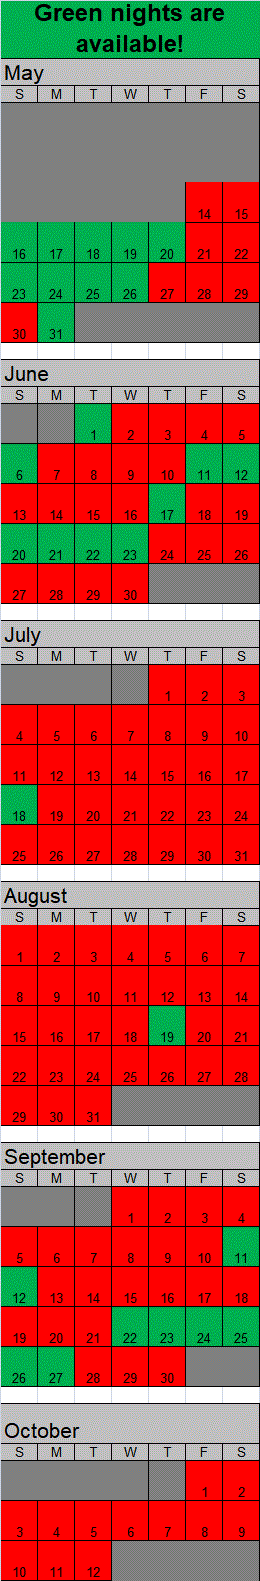 Lakeview Site 4 2015 Calendar